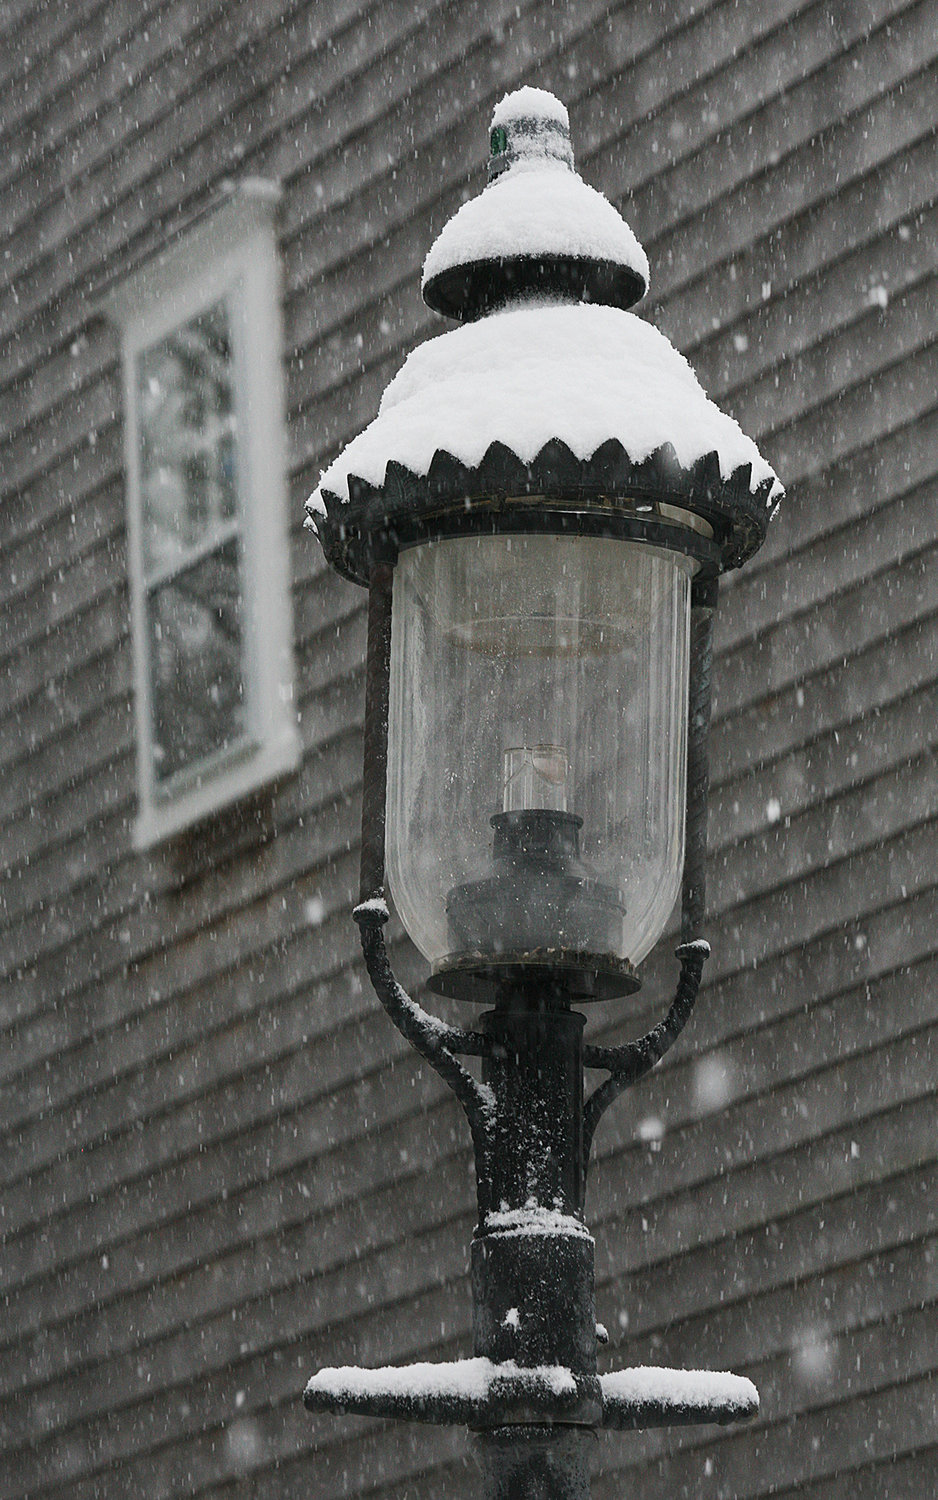 Snow coats a lamp on Centre Street.